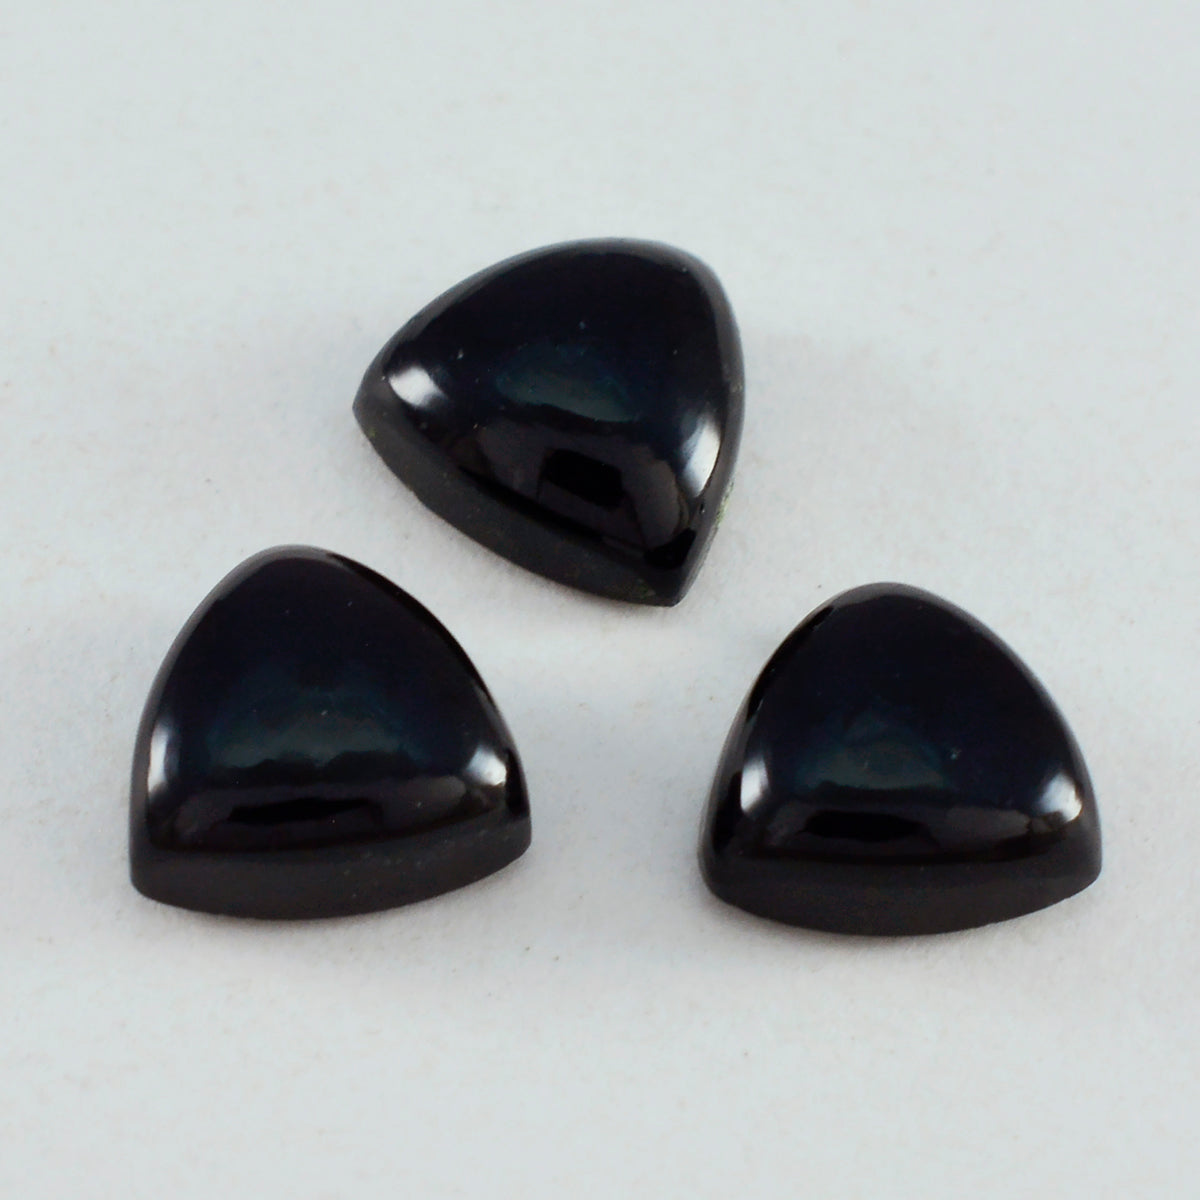 Riyogems 1PC Black Onyx Cabochon 12x12 mm Trillion Shape Good Quality Loose Gems